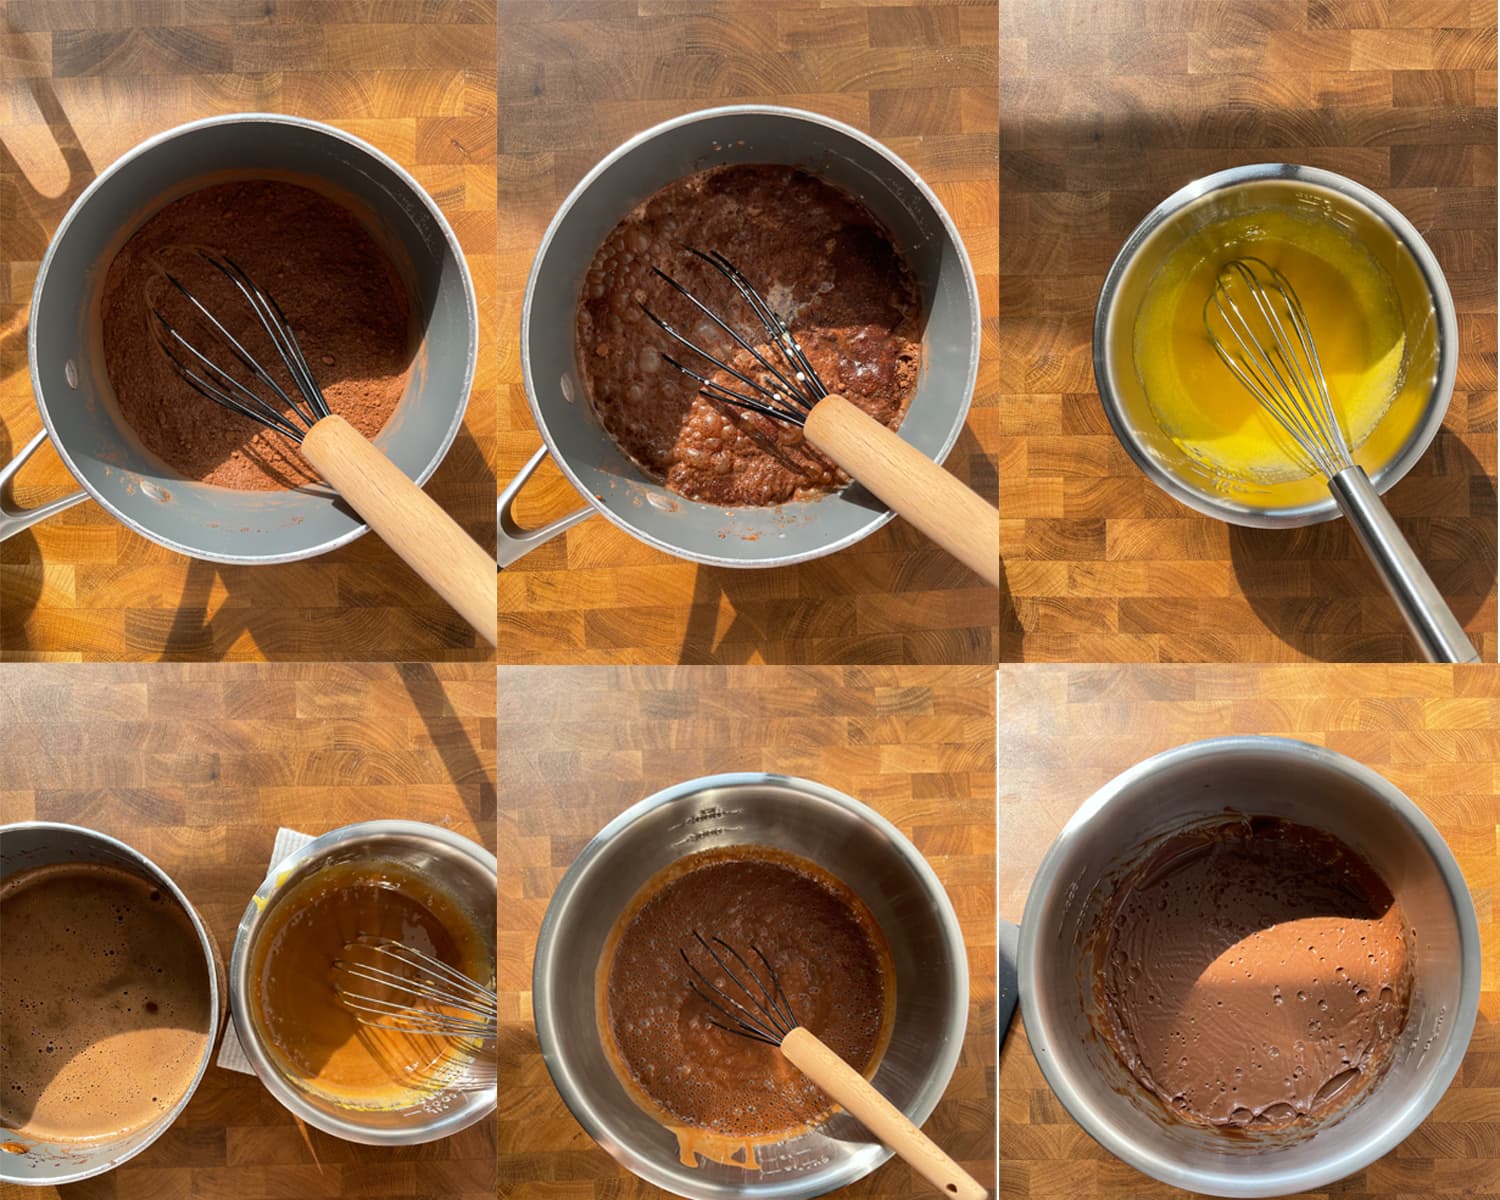 Process of making the mocha custard for mocha ice cream.